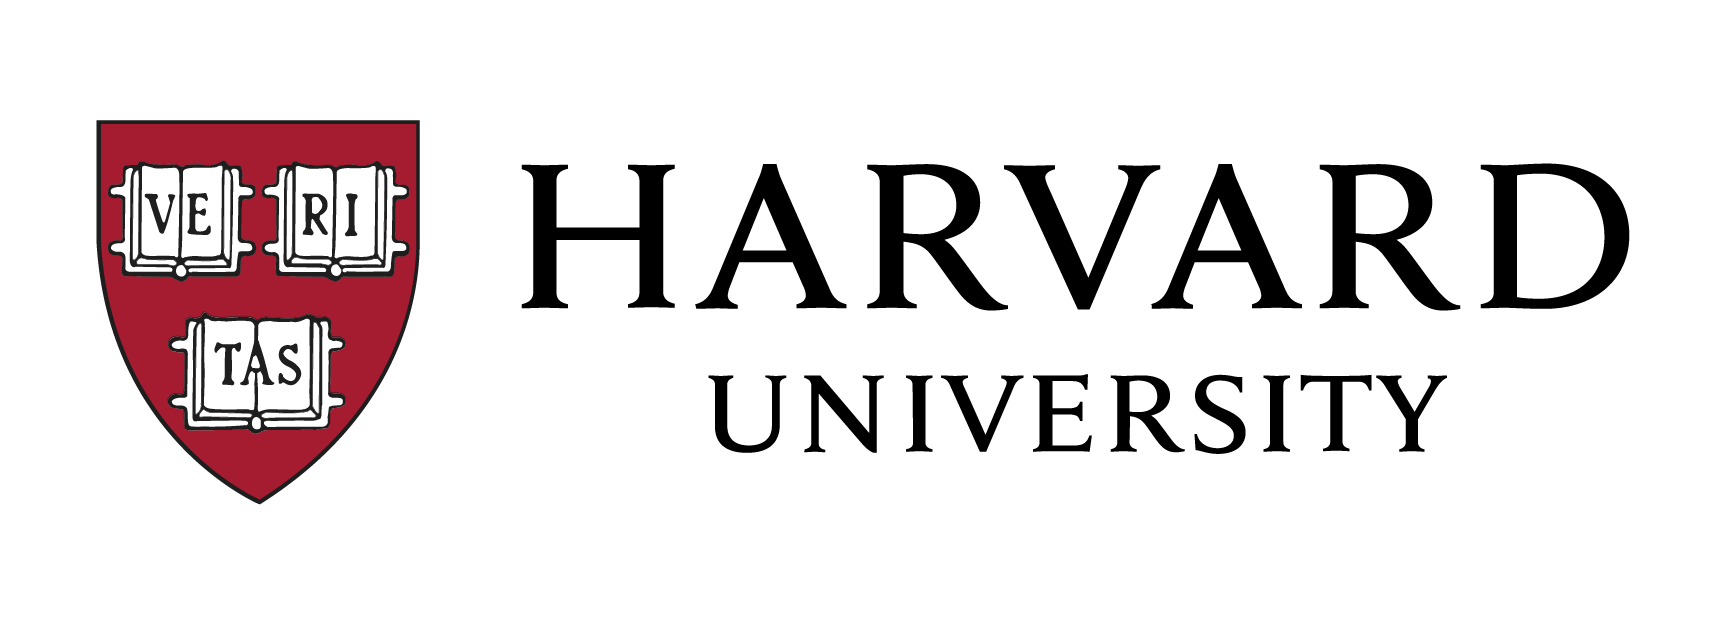 harvard logo left